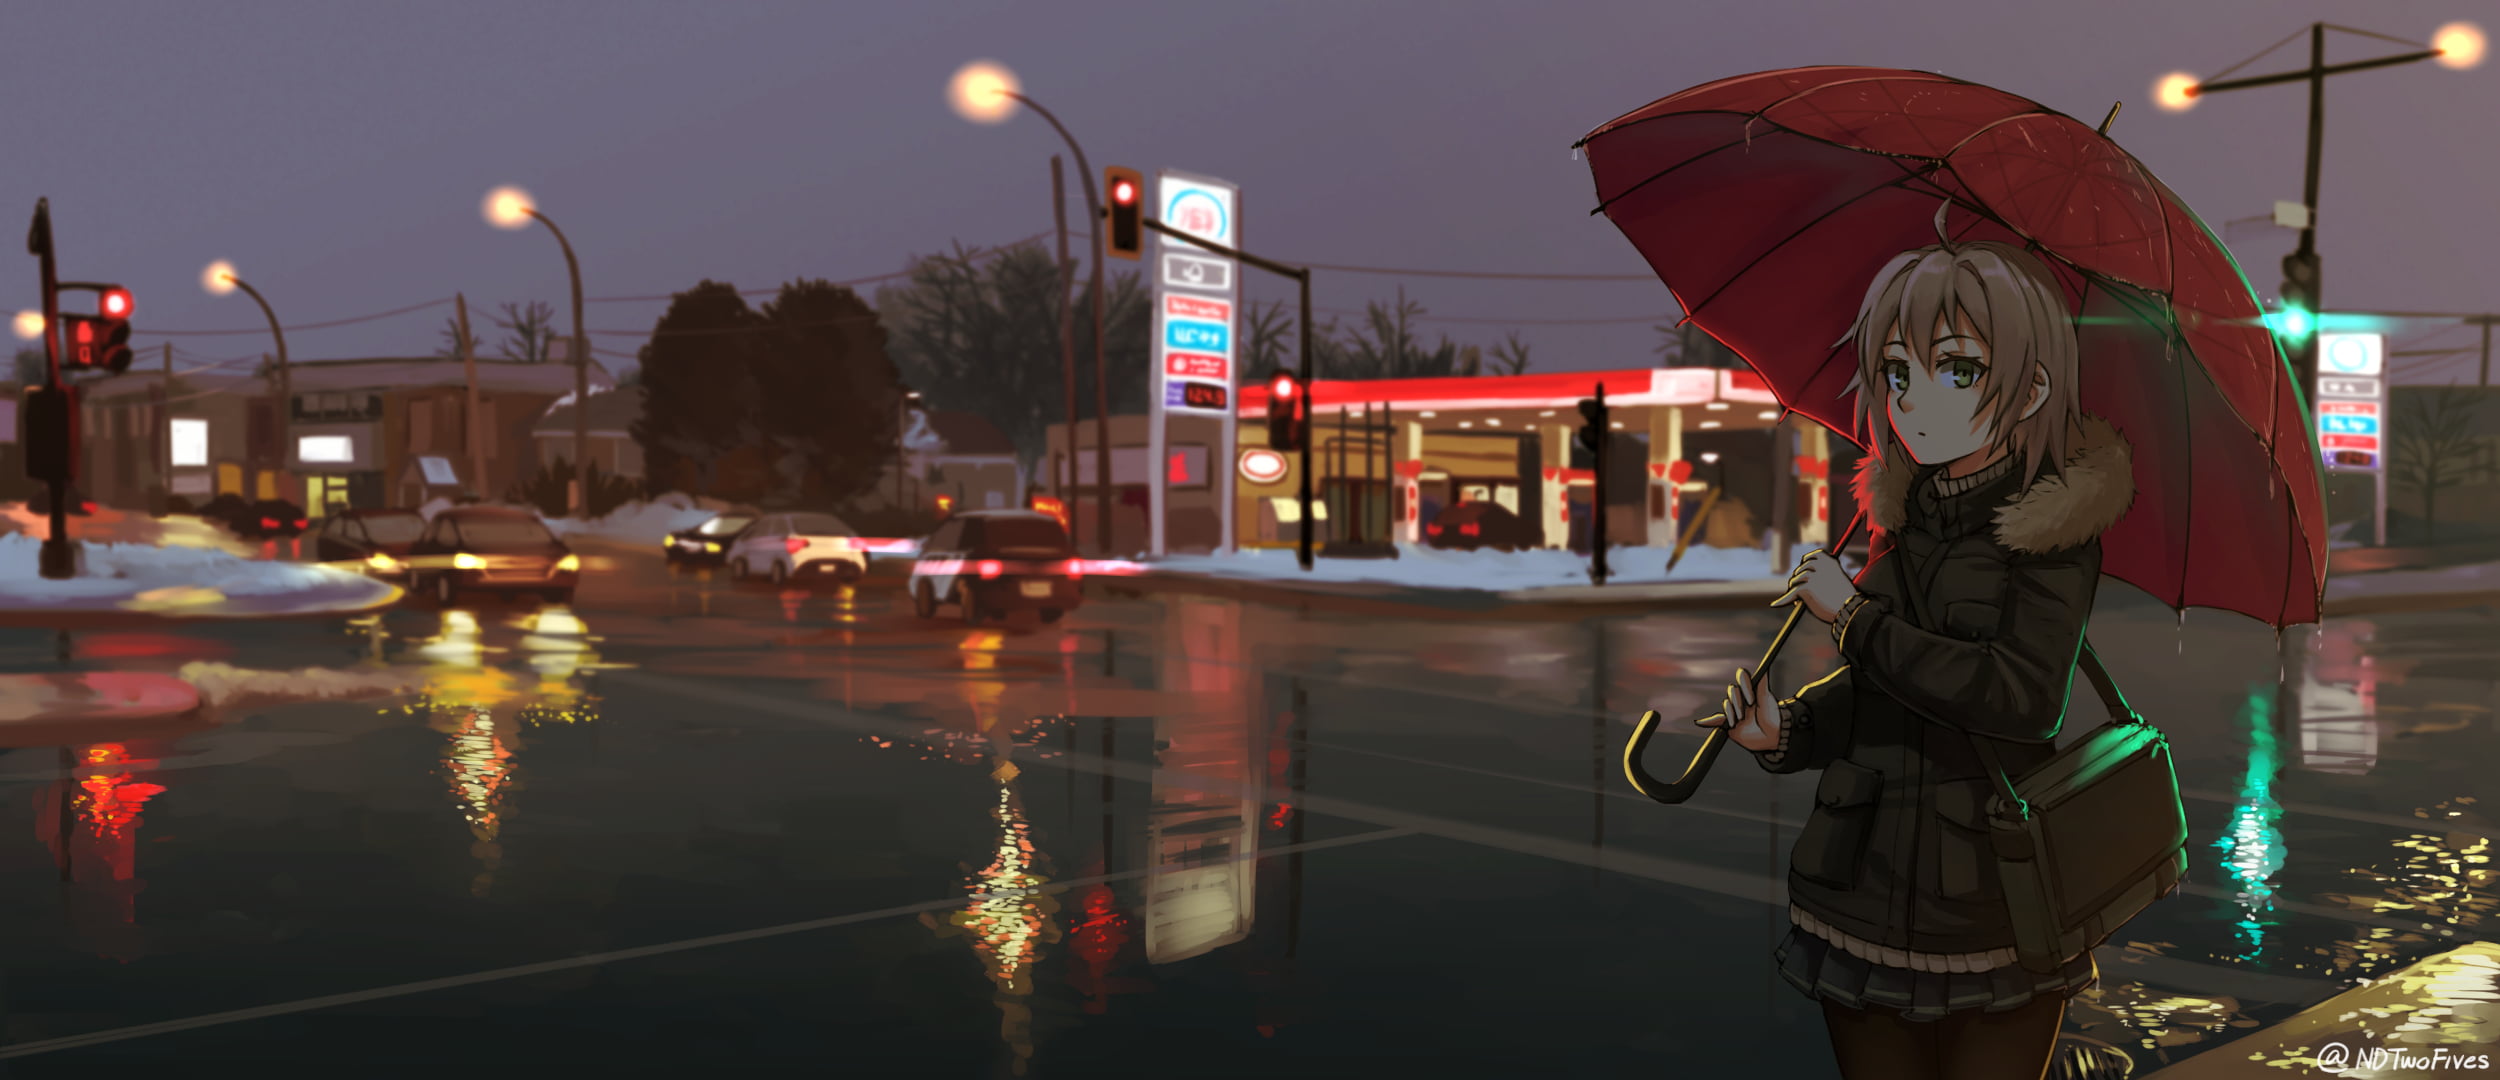 black and red patio umbrella, short hair, sky, car, rain, city